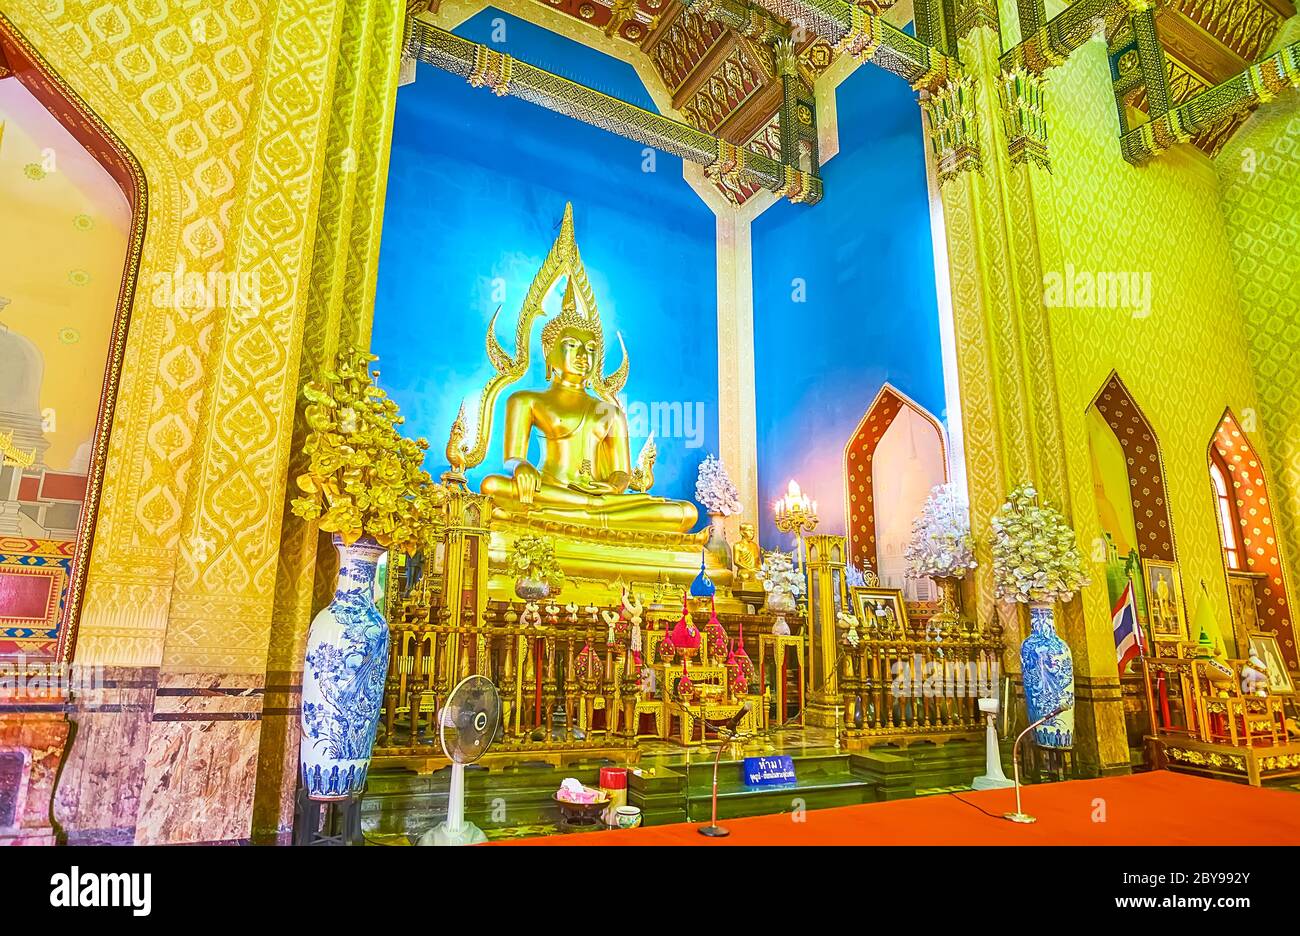 BANGKOK, THAILAND - MAY 13, 2019: The scenic interior of the Ubosot (Ordination Hall) of Wat Benchamabophit Dusitvanaram Marble Temple with golden Bud Stock Photo